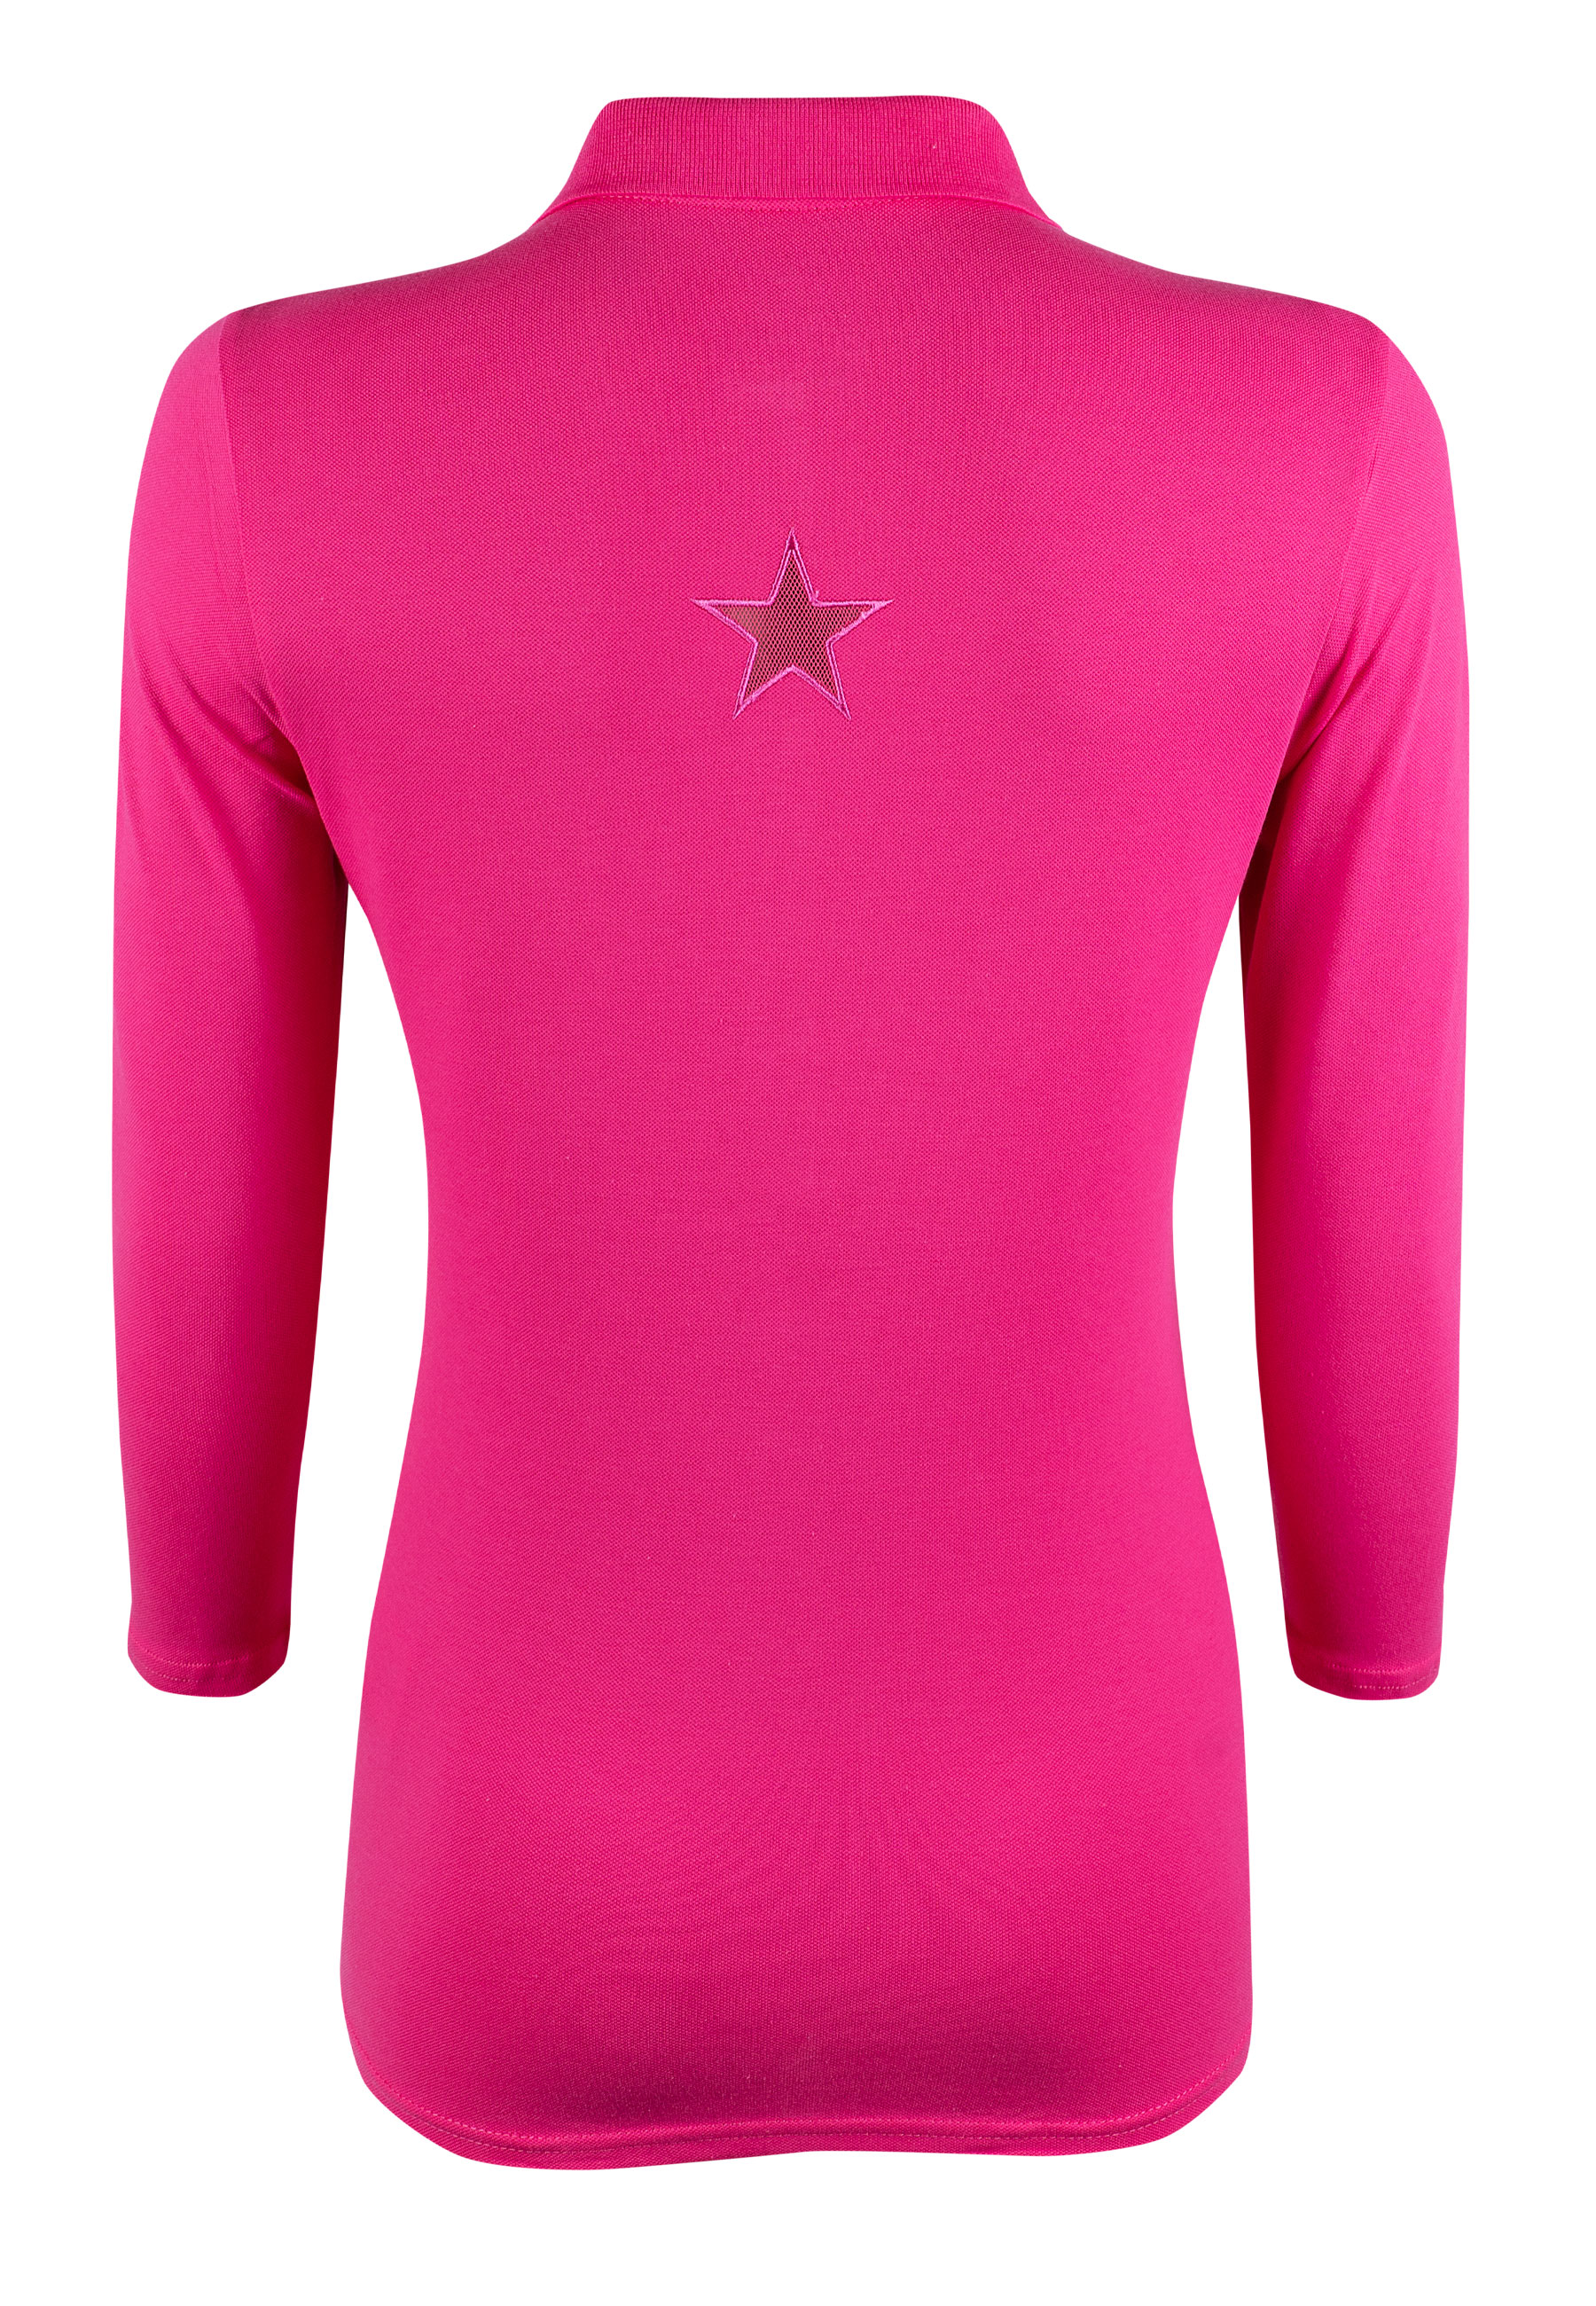 girls golf Polo 'basic STARSISSI' (pink)